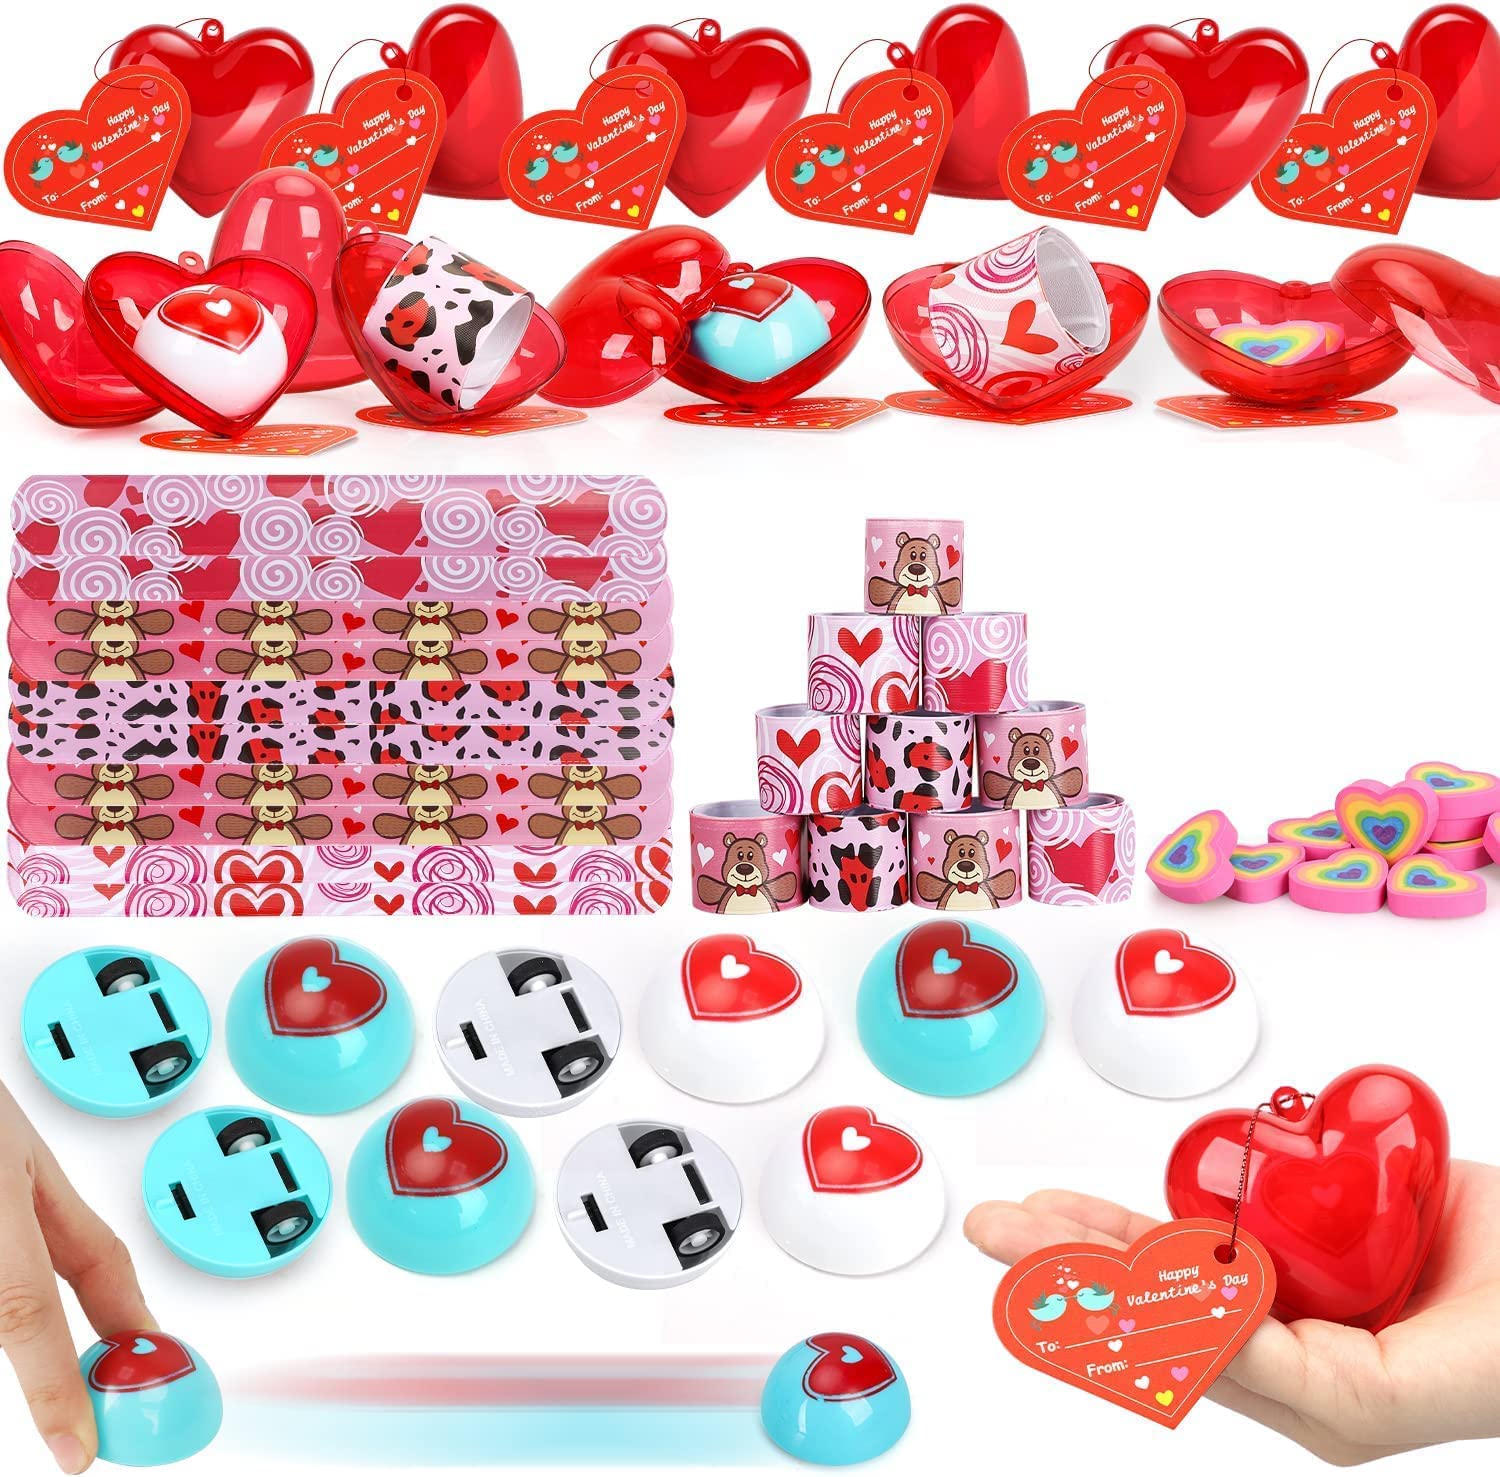 Toy Life Valentines Day Gifts For Kids Classroom, Valentine Heart Boxes For Kids With Valentines Slap Bracelets Valentine Exchan